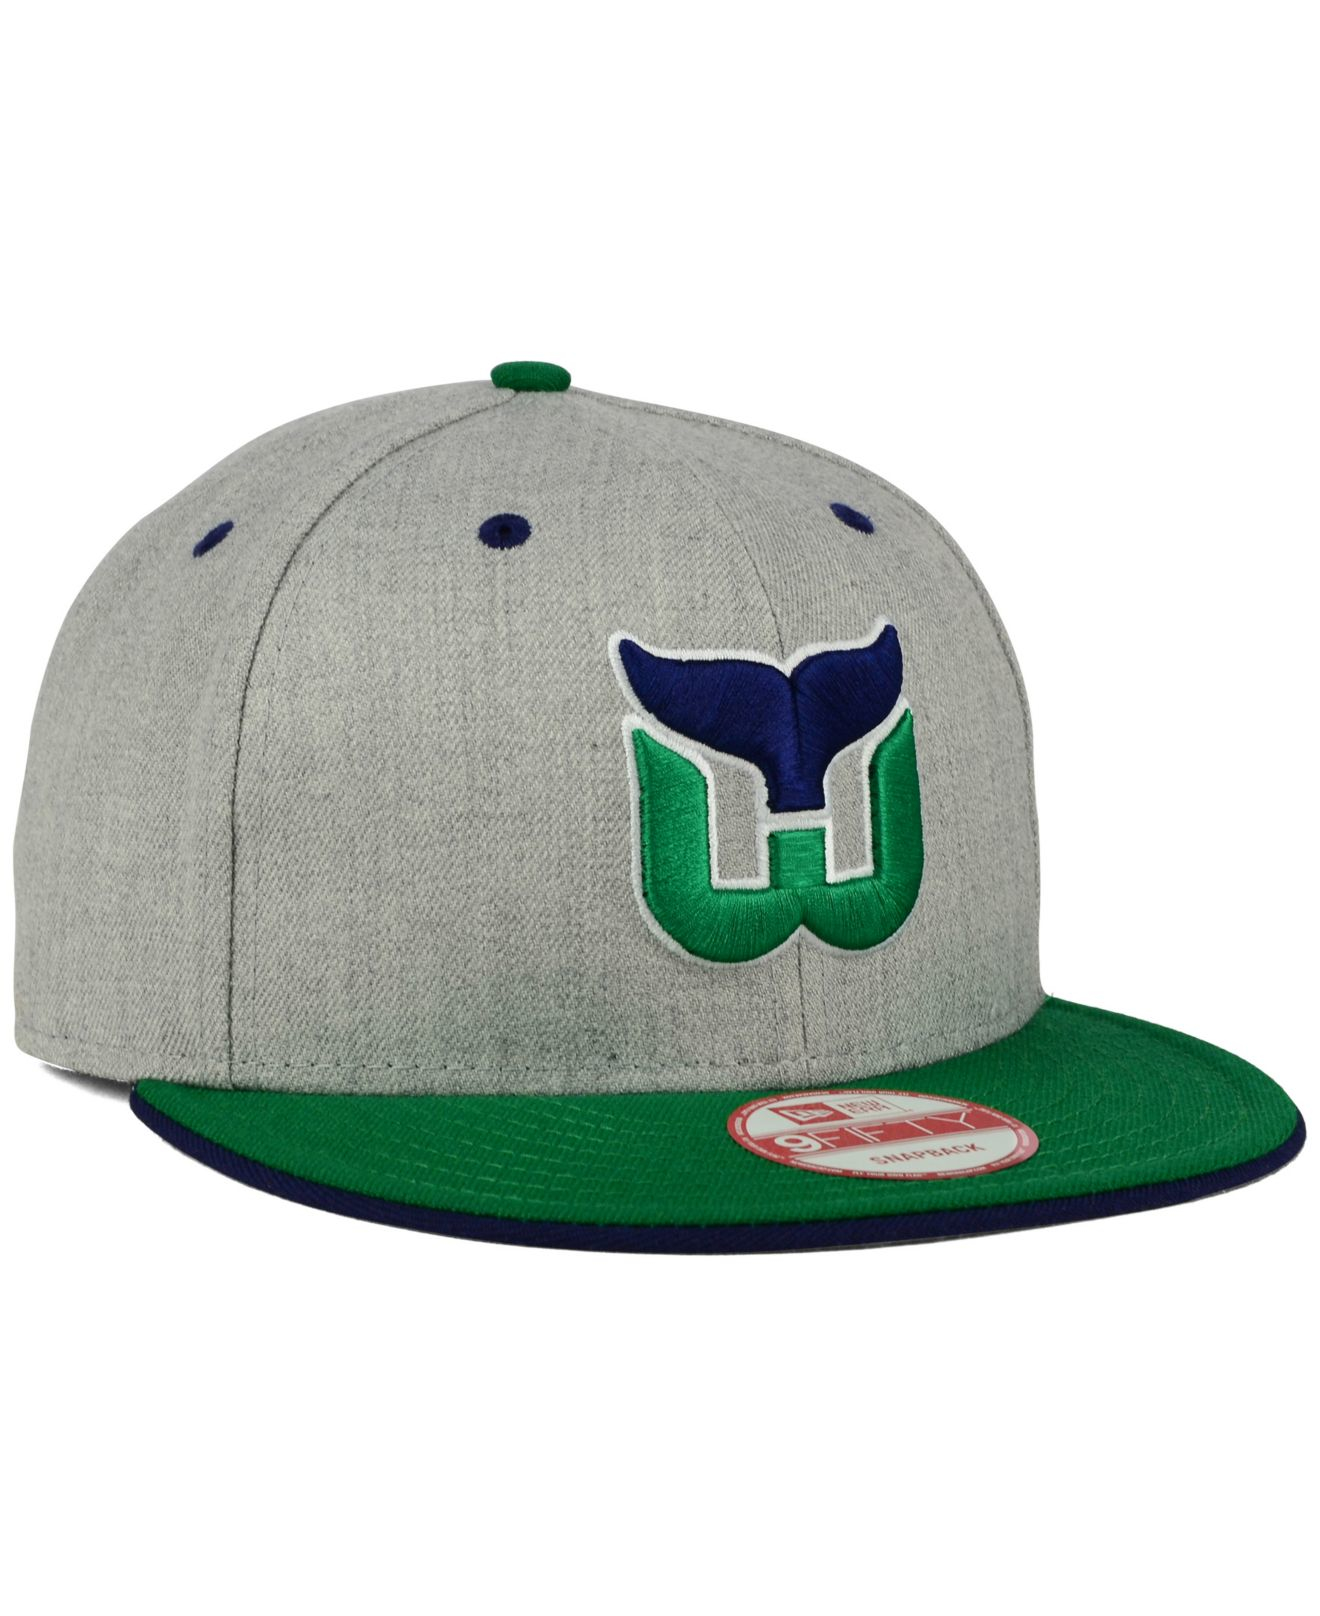 Hartford Whalers 2T WORDMARK Black-Green Fitted Hat